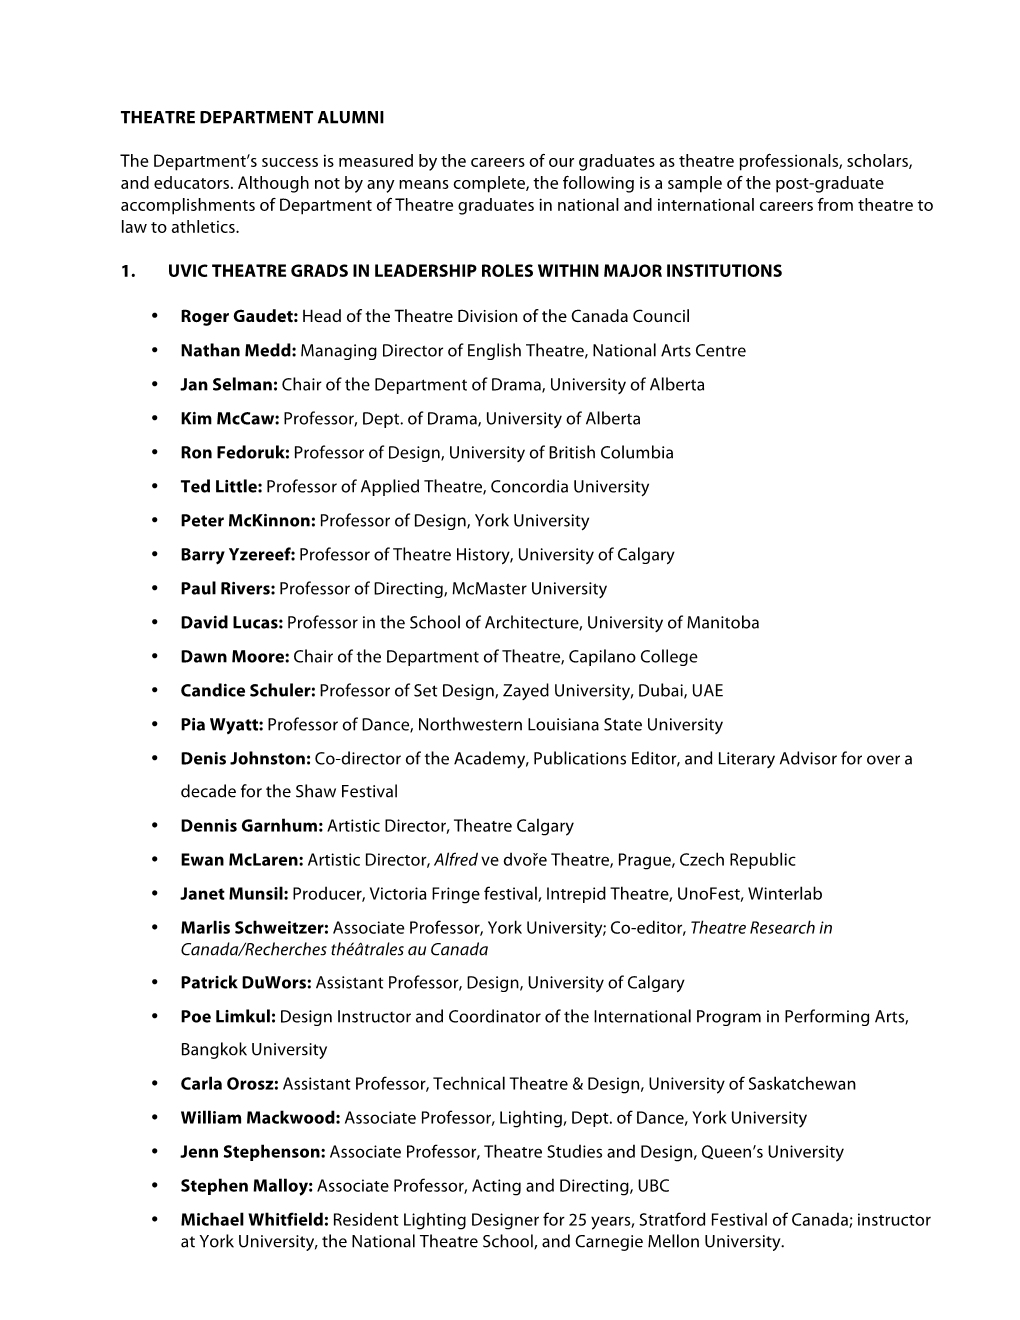 List of Accomplished Uvic Theatre Alumni